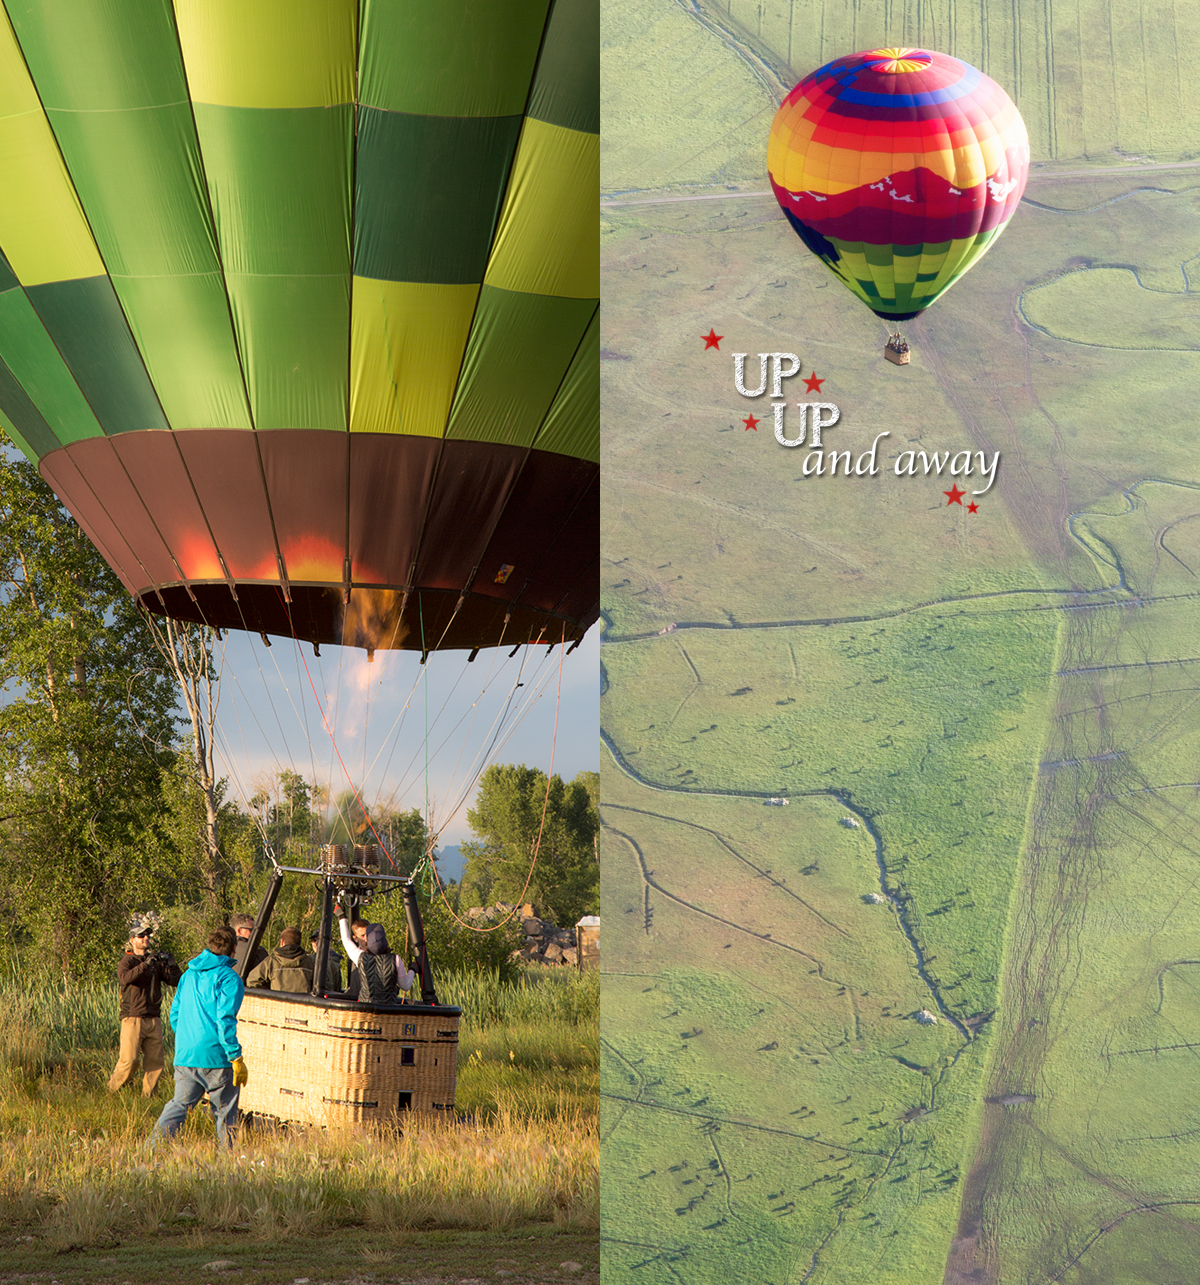 wyoming ballooning company & elevated hot air ballooning in Jackson Hole, Wyoming